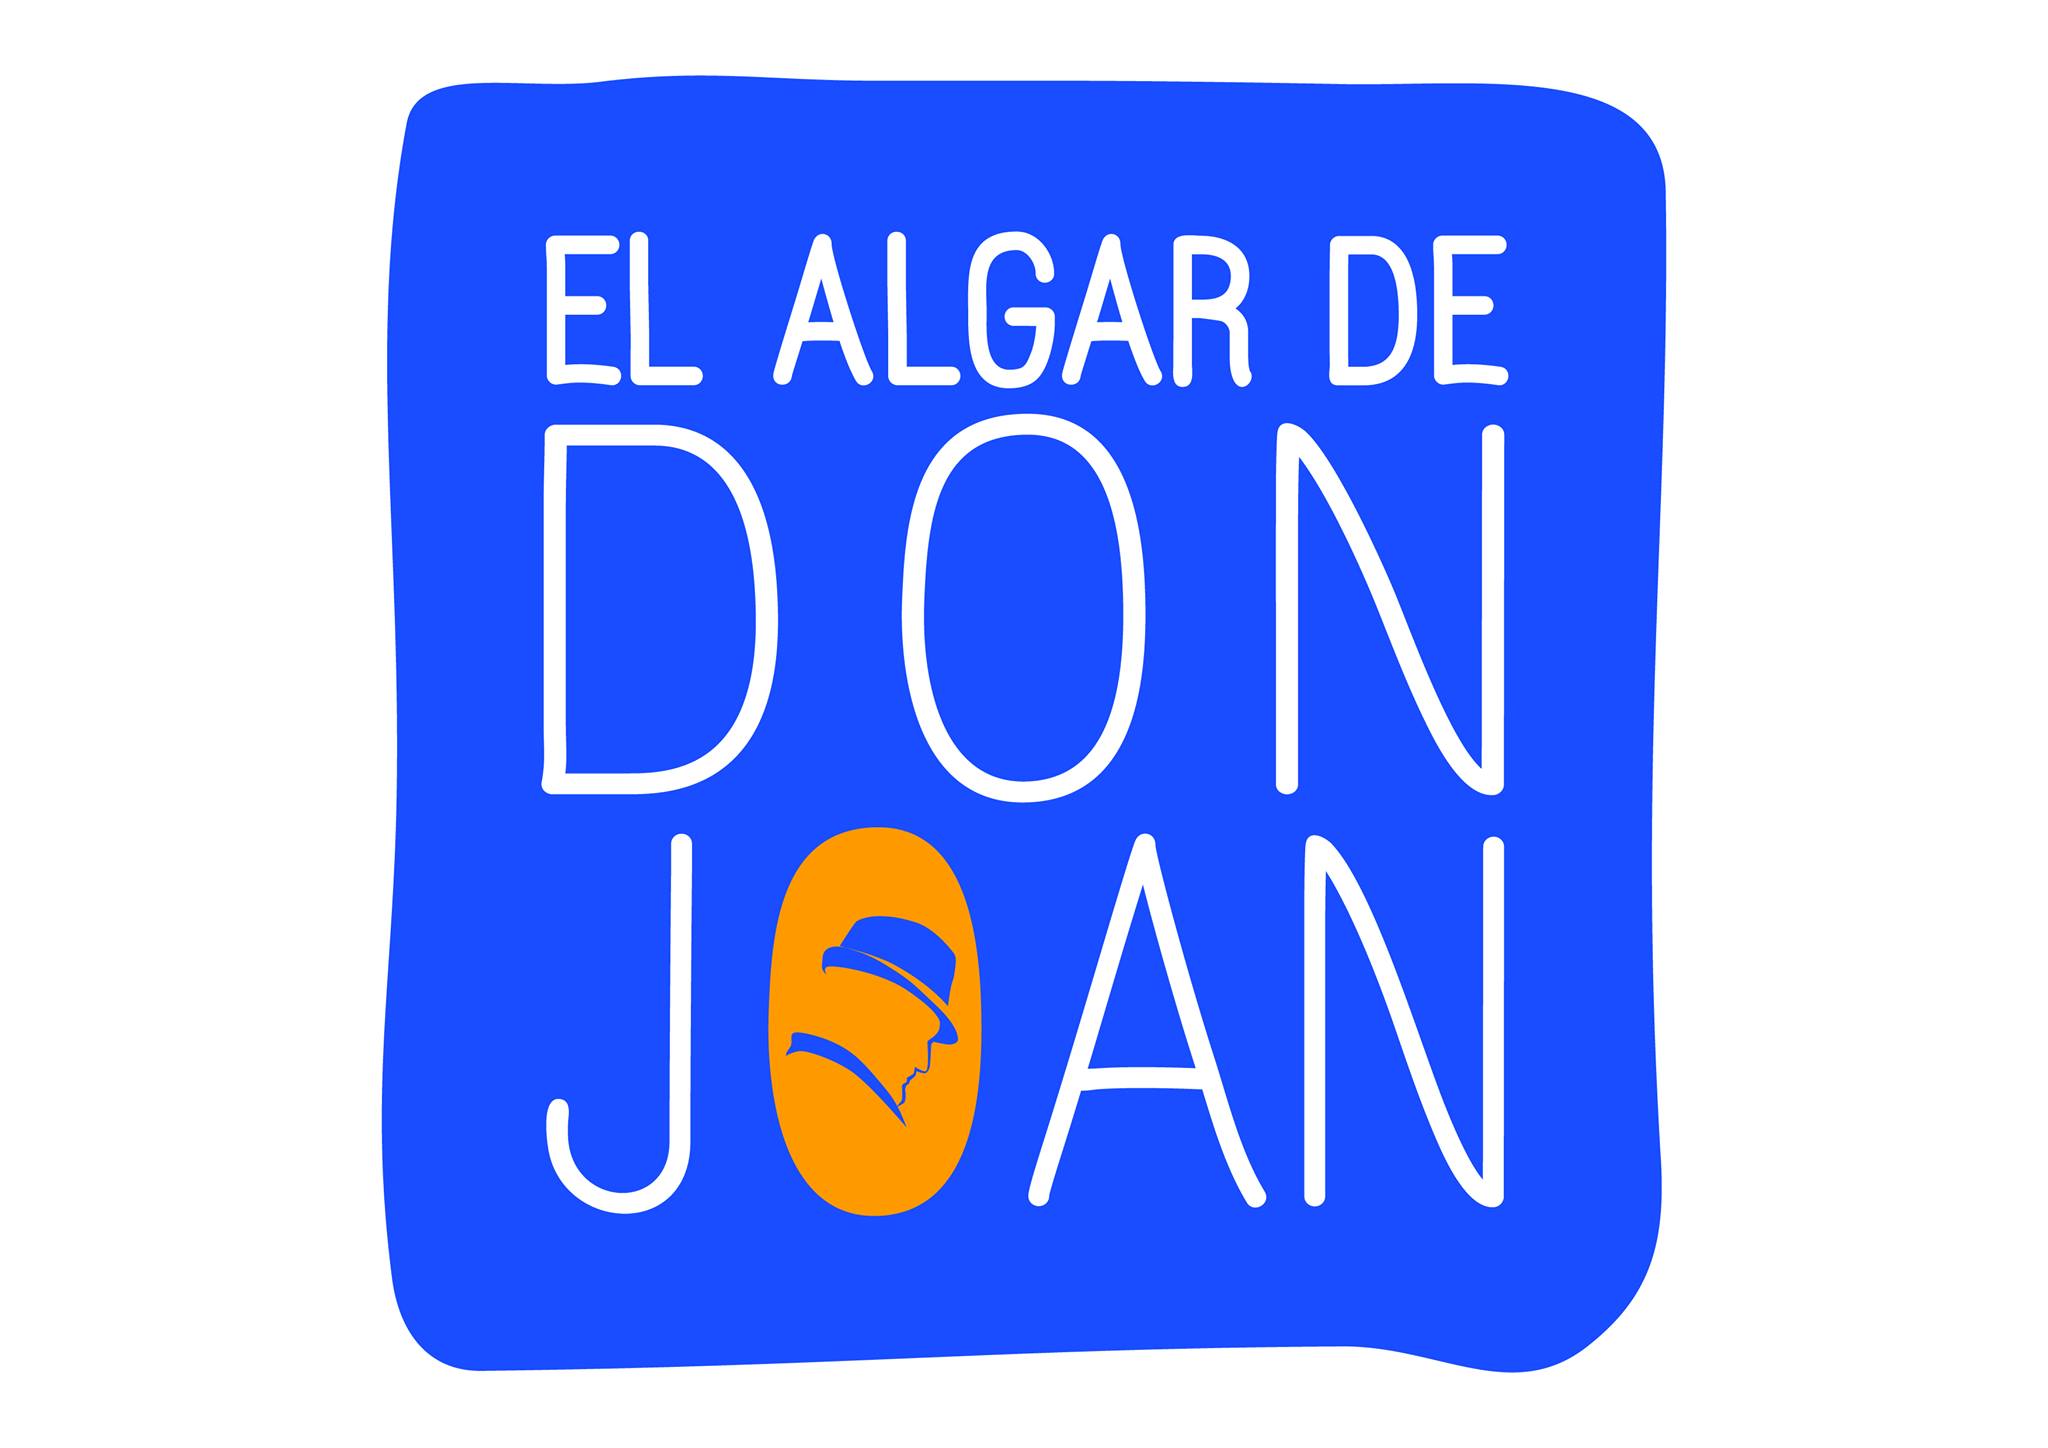 Algar de Don Joan